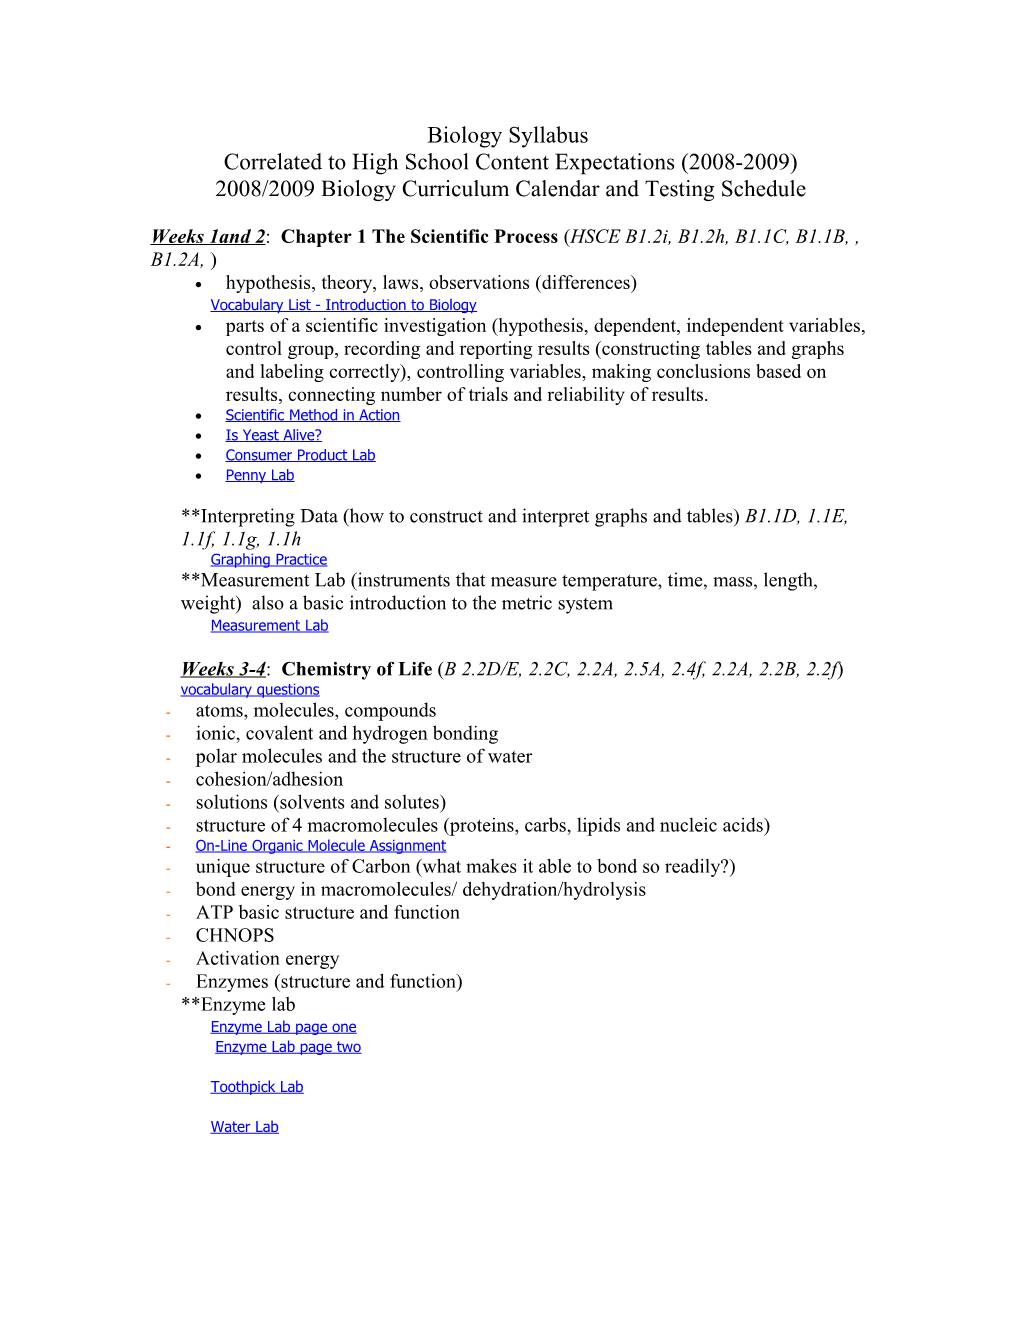 2007/2008 Biology Curriculum Calendar and Testing Schedule